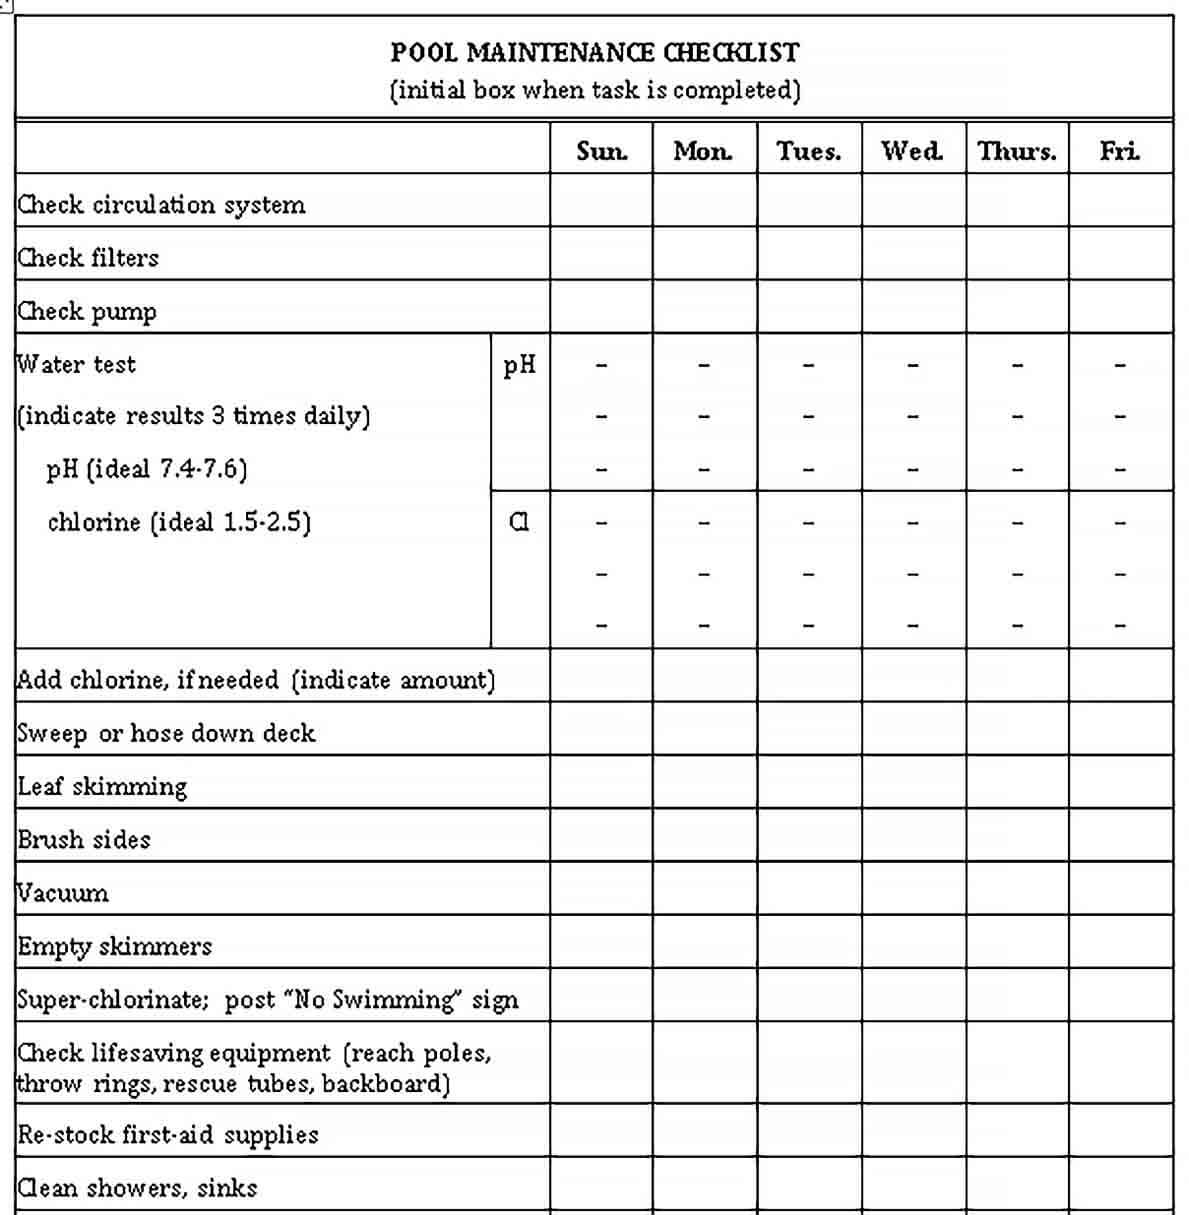 Sample 07 PA Pool Maintenance Checklist